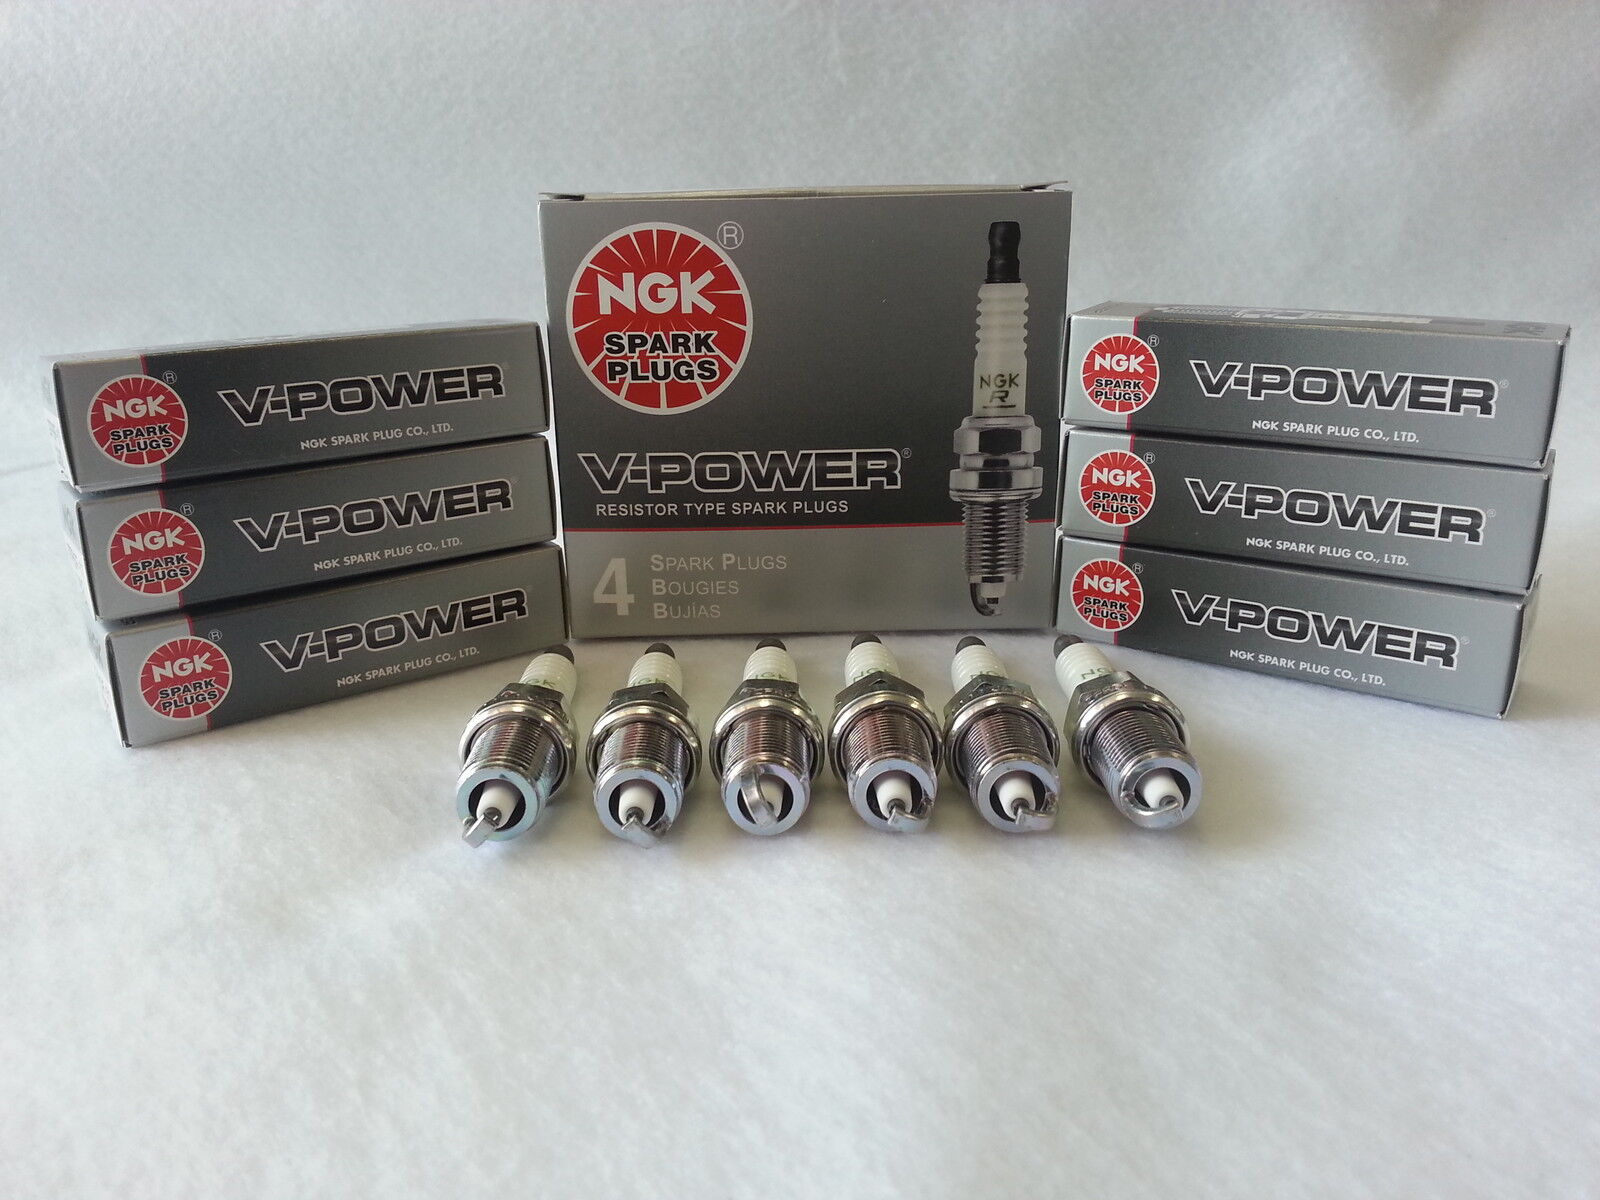 6-New NGK V-Power Copper Spark Plugs ZGR5A #5077 Made in Japan 